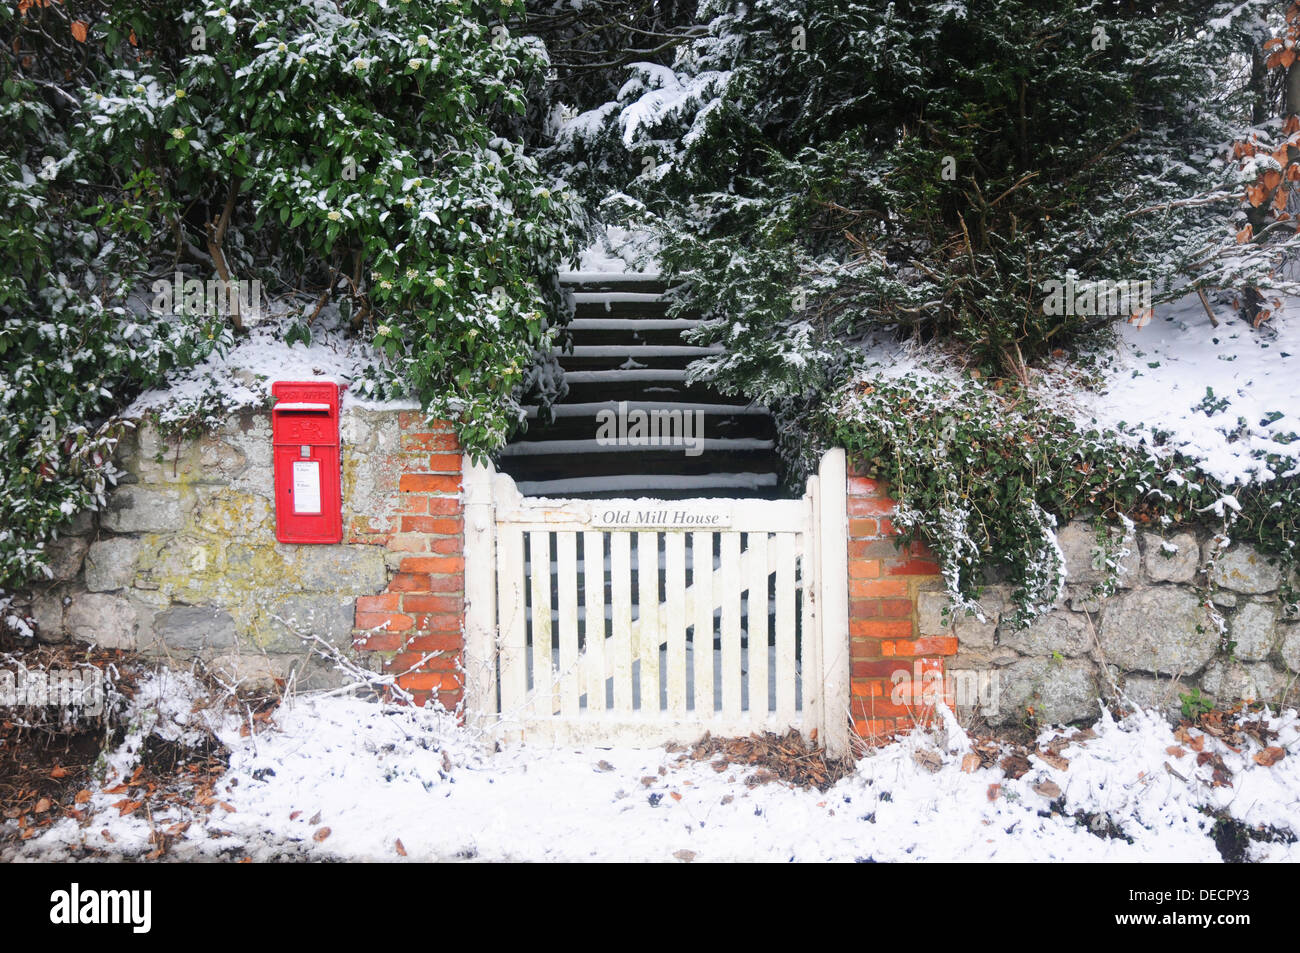 Old Mill House garden gate, old style red post box, mur de briques, comme suit. Banque D'Images